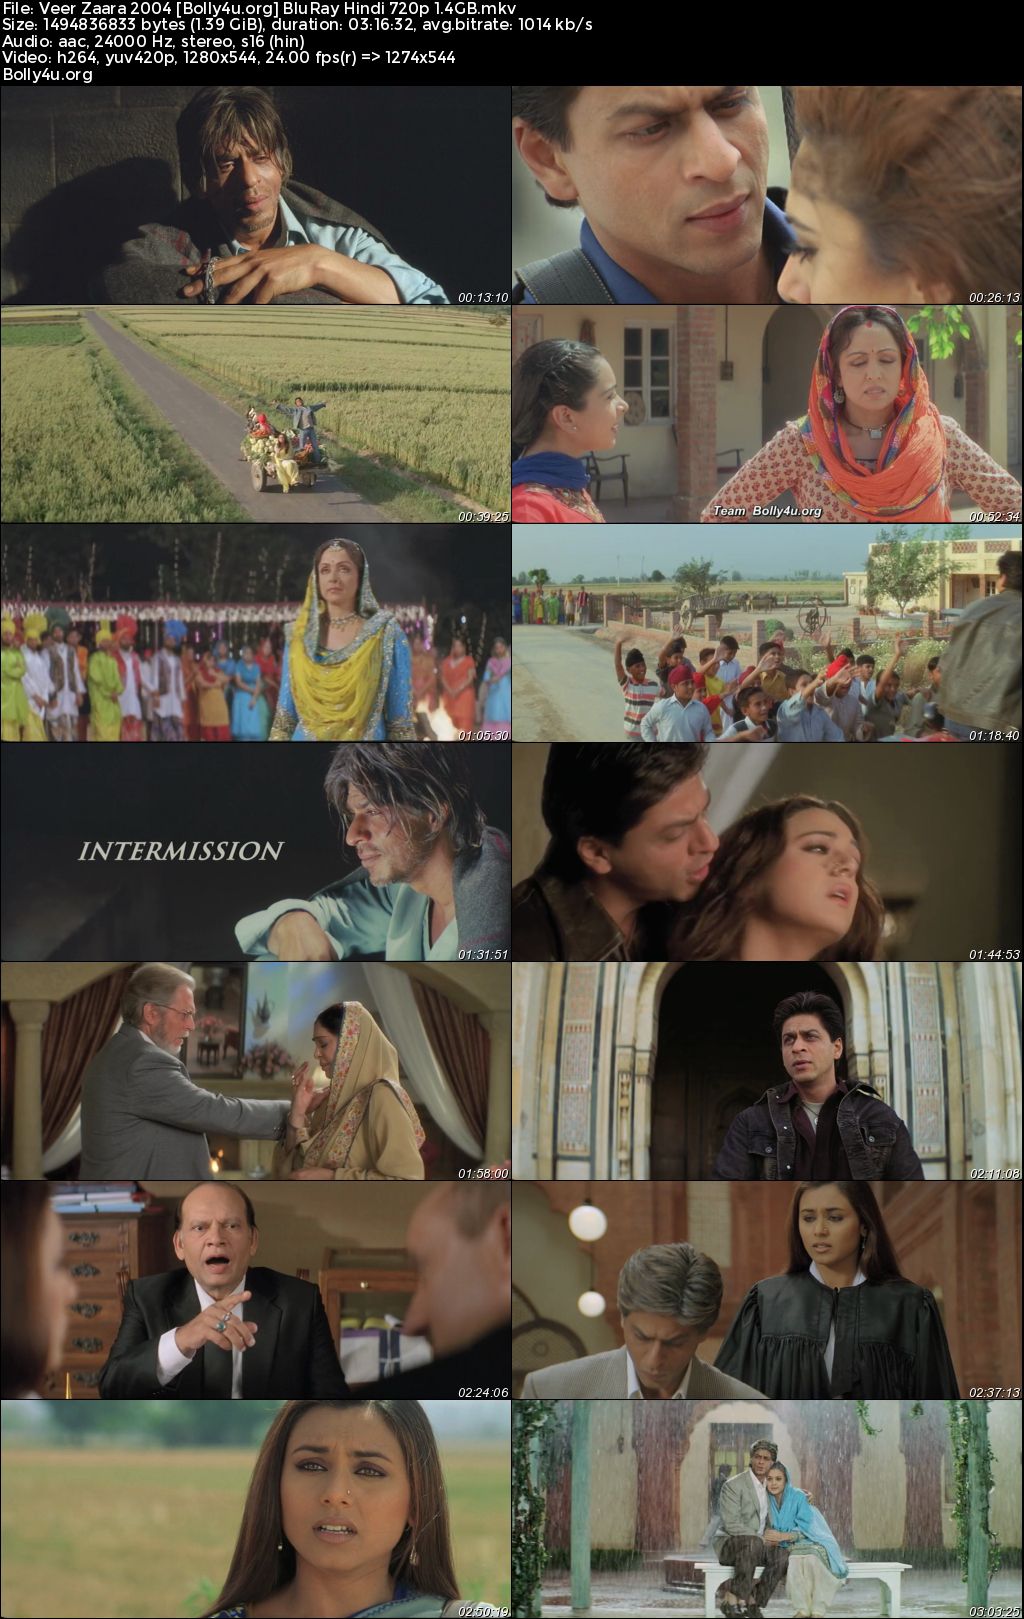 Veer-Zaara 2004 WEB-DL Hindi Full Movie Download 1080p 720p 480p